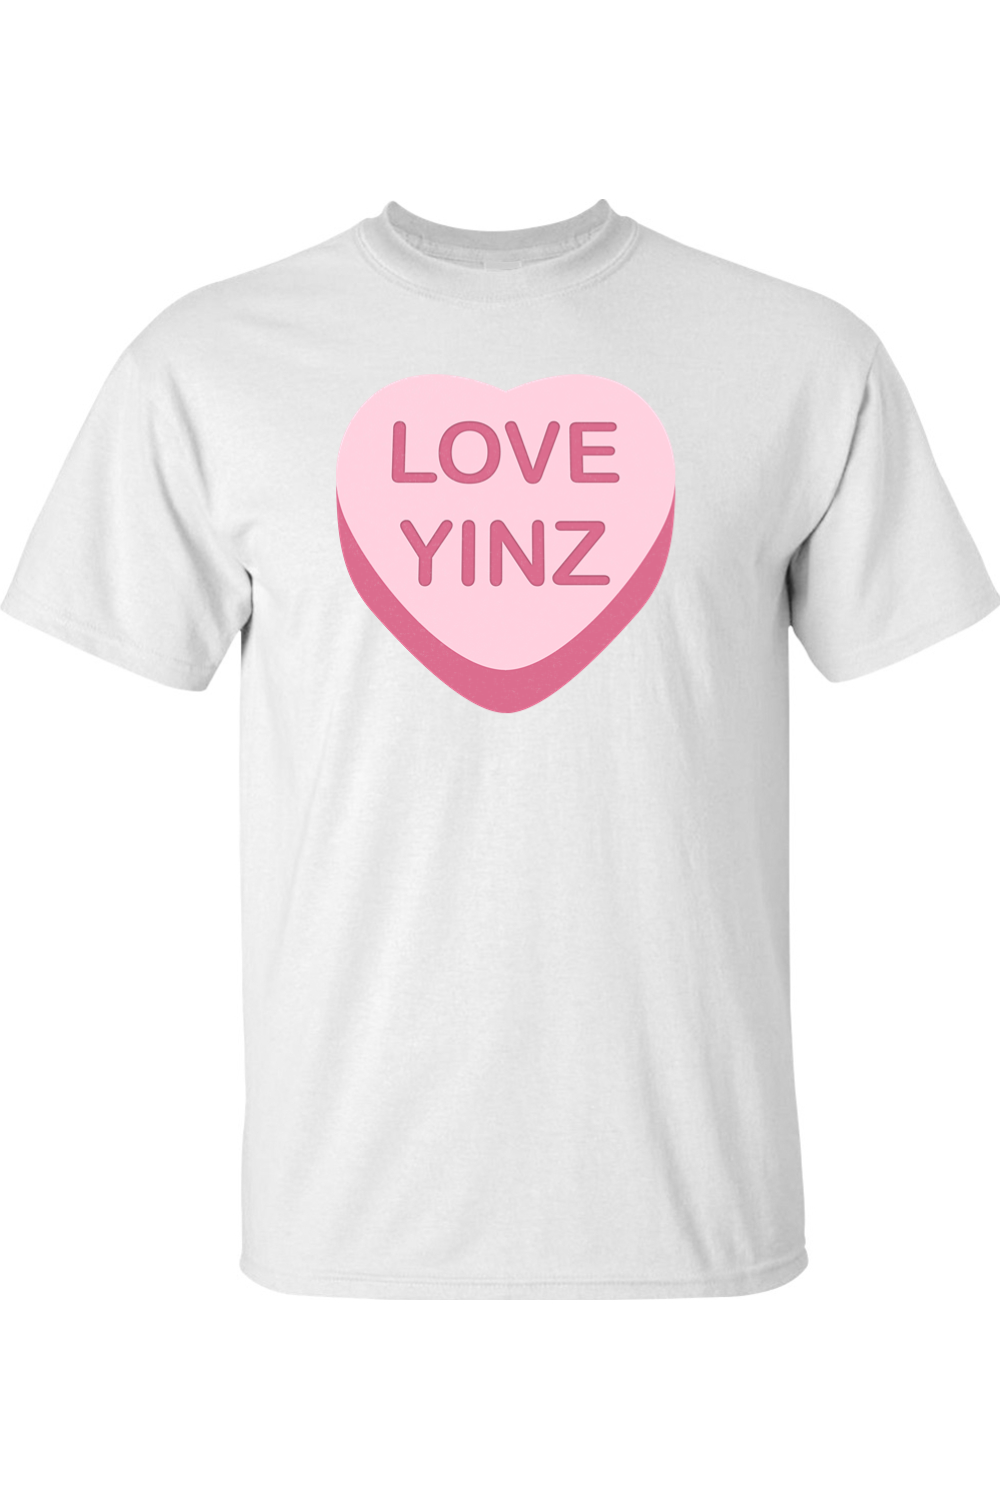 Love Yinz - Conversation Heart - 4XL & 5XL - Yinzylvania